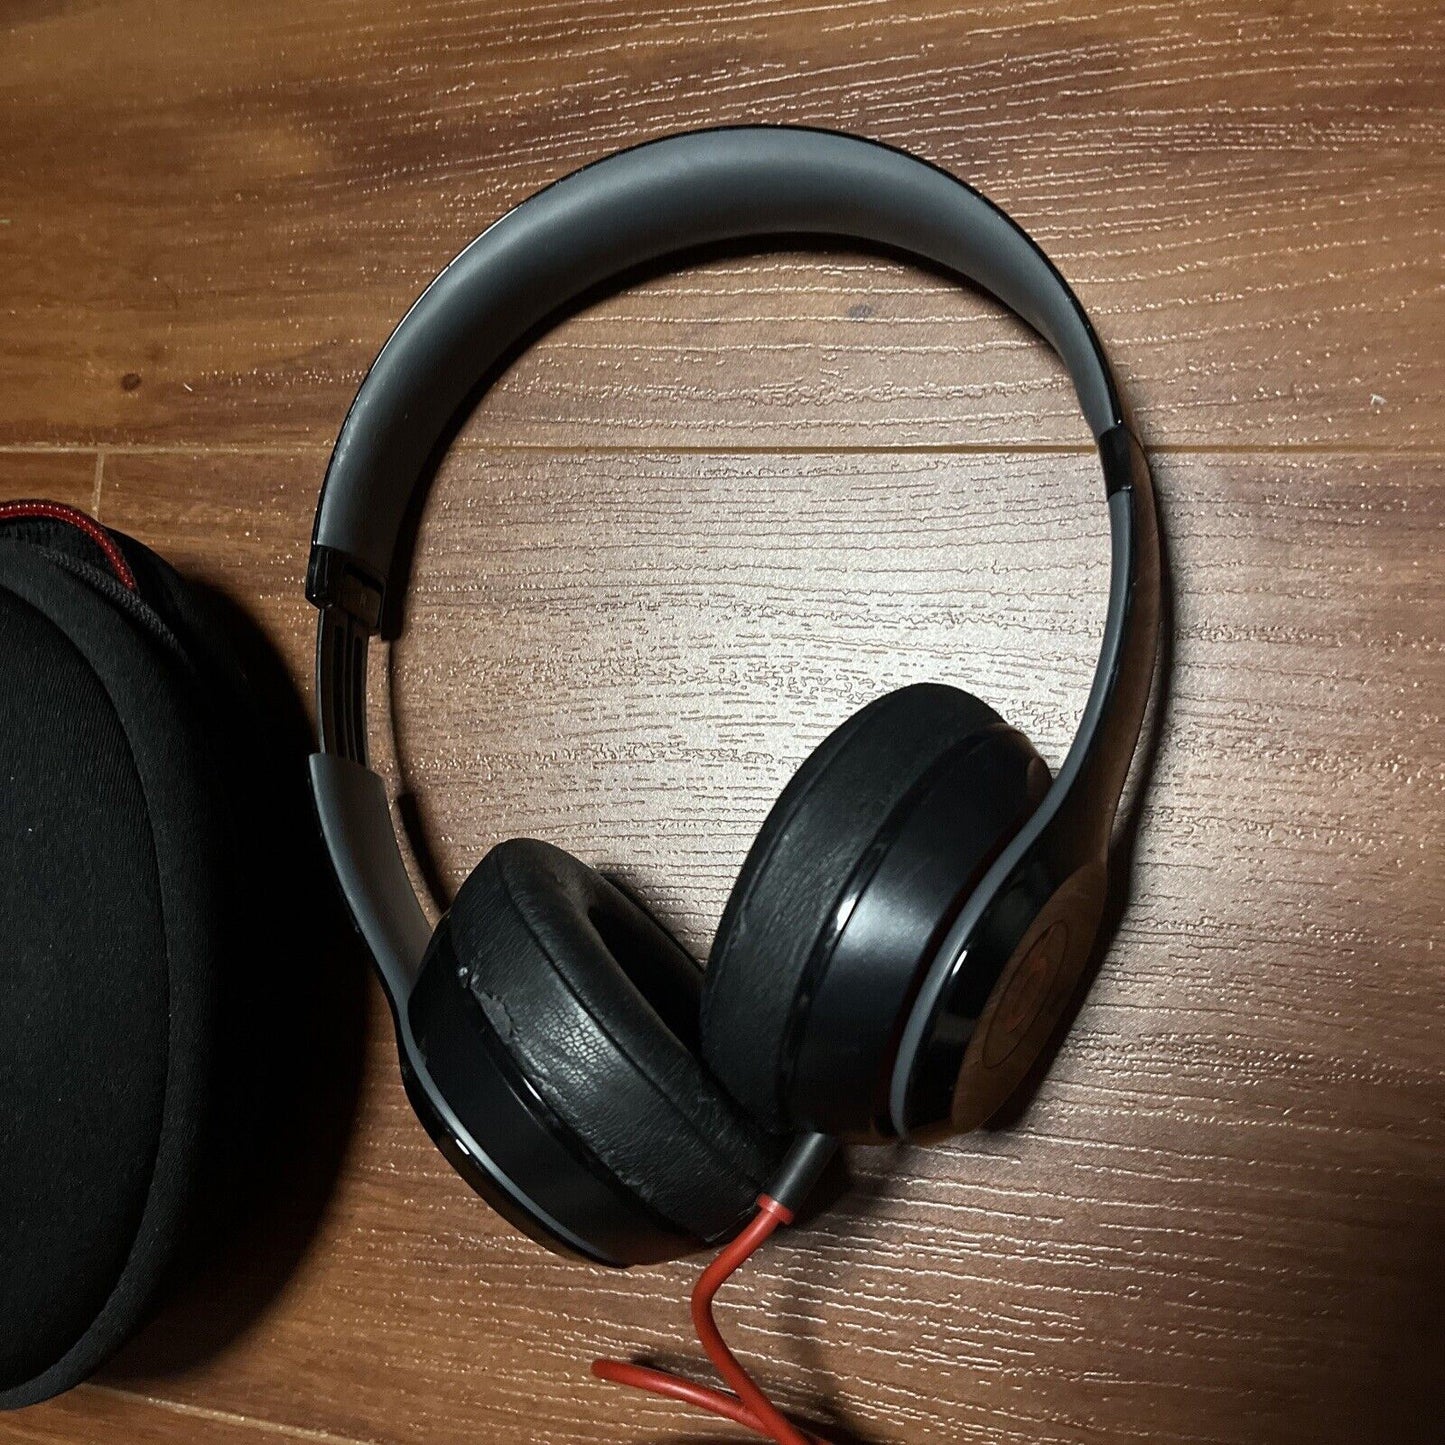 Beats Solo 2 Headphones Model B0518 Wired Black